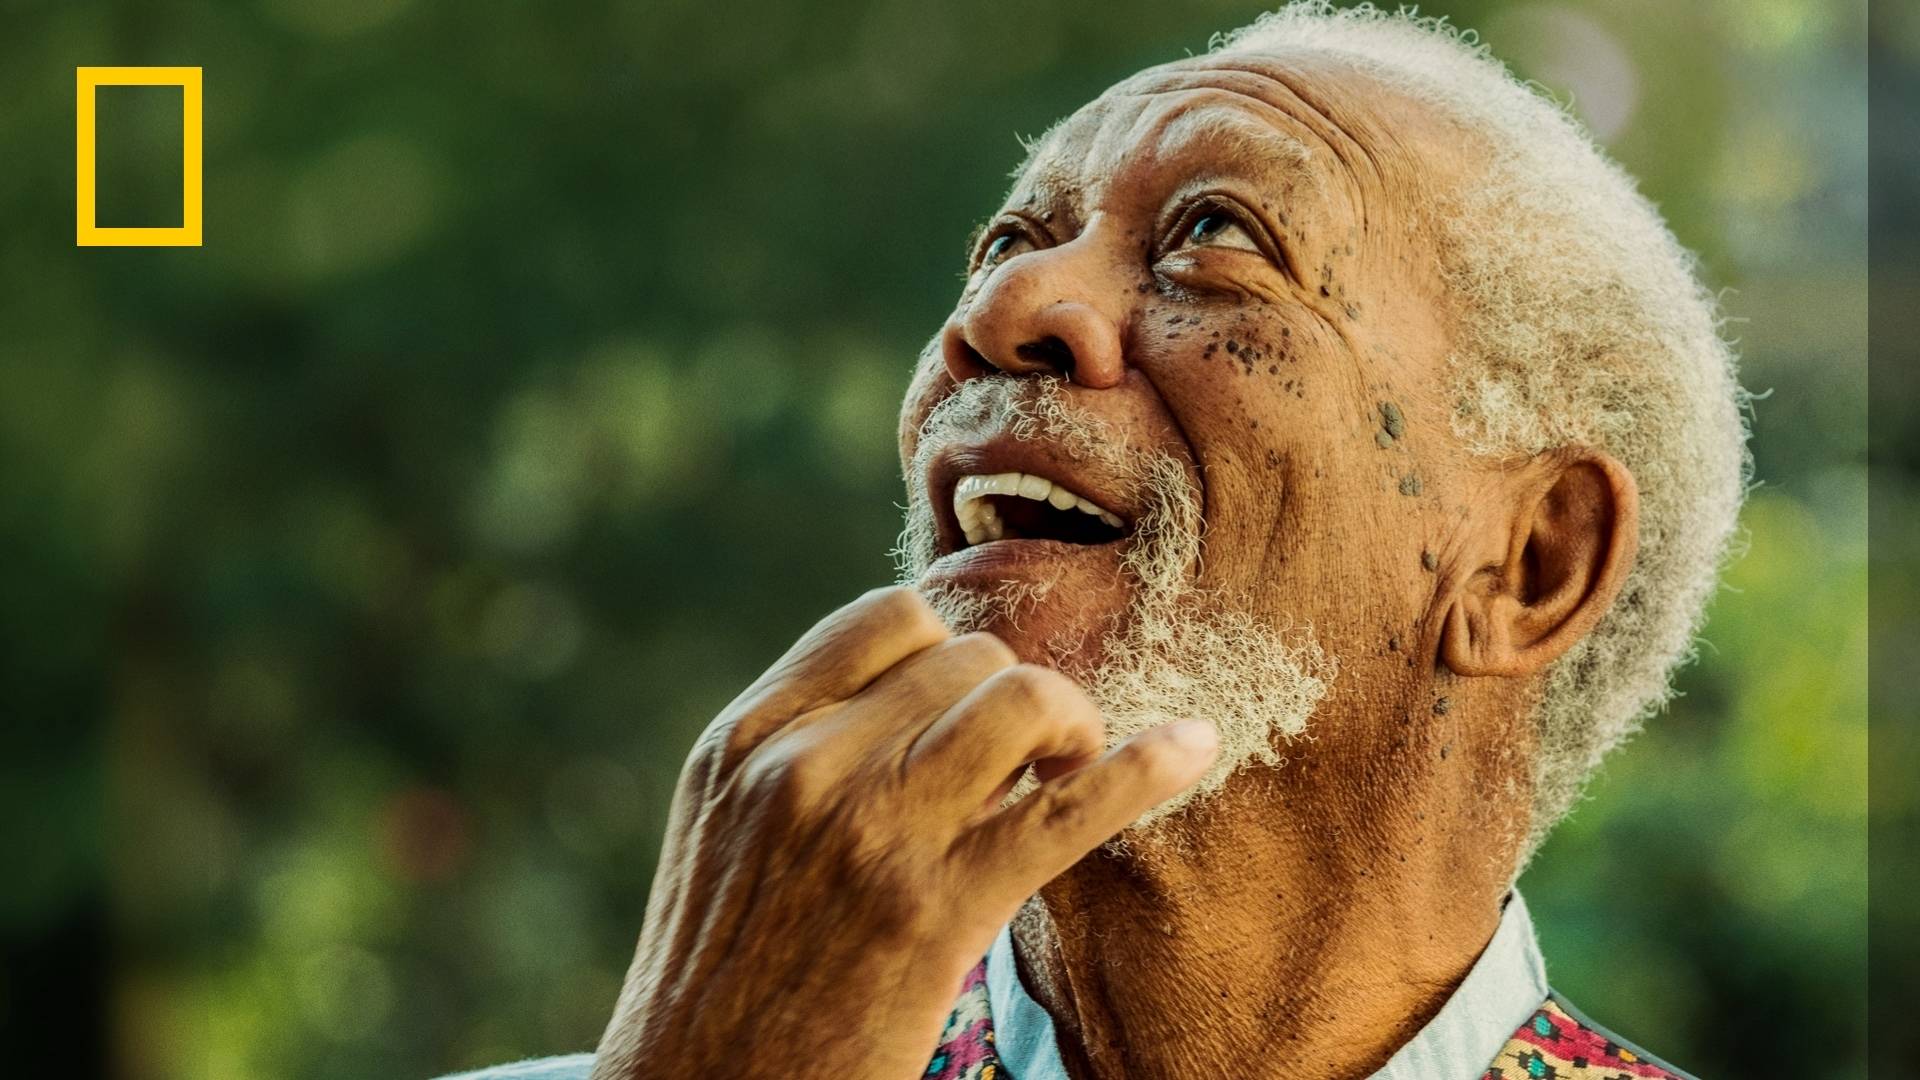 Morgan Freeman ile İnancın Hikayesi